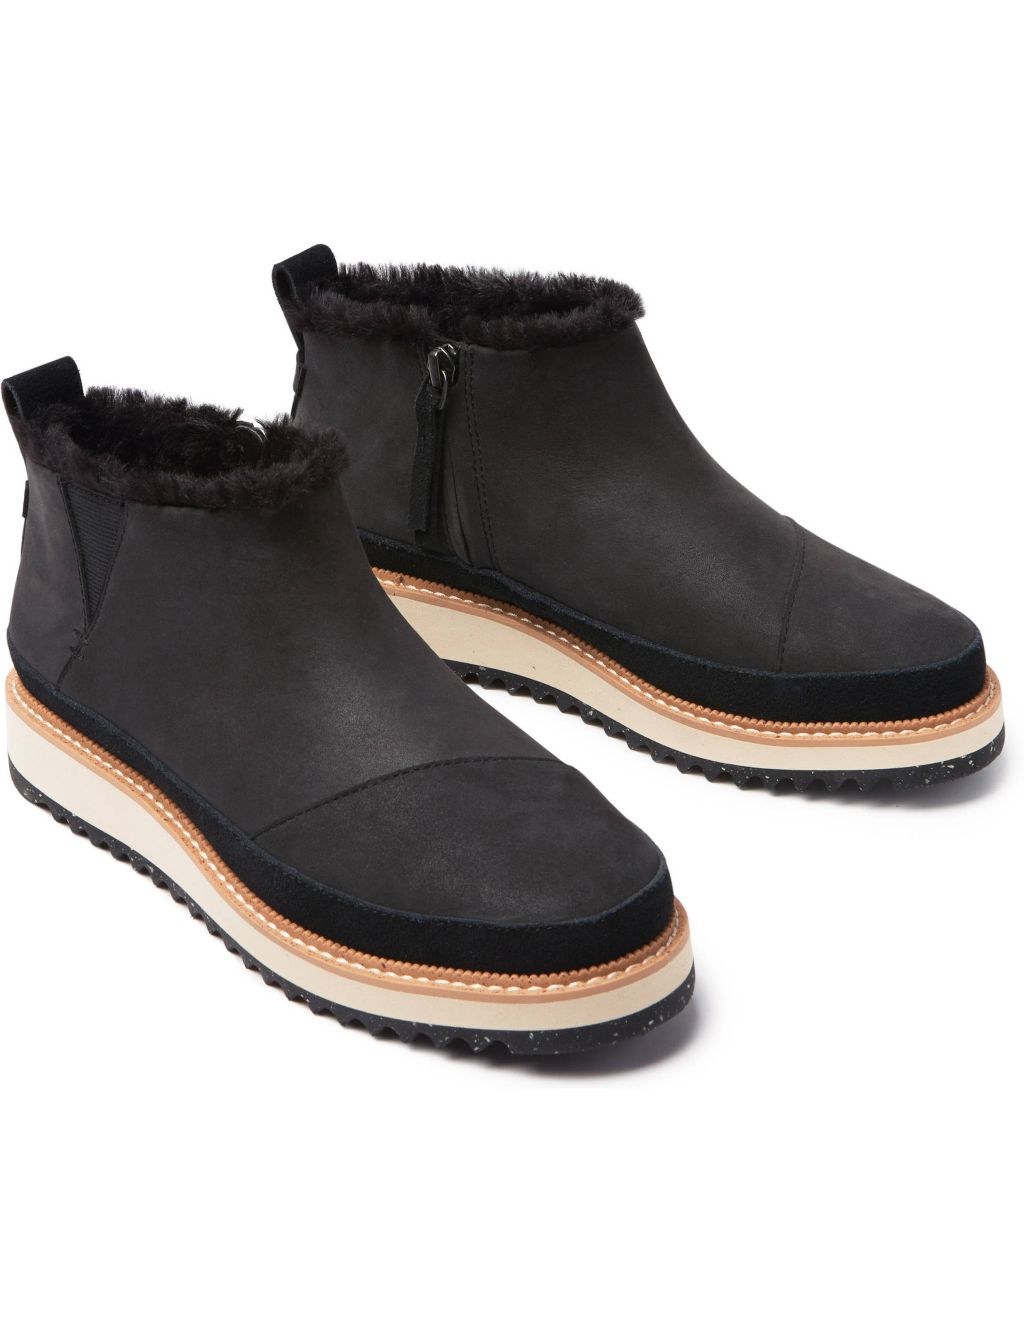 Leather Faux Fur Lining Flatform Shoe Boots image 2